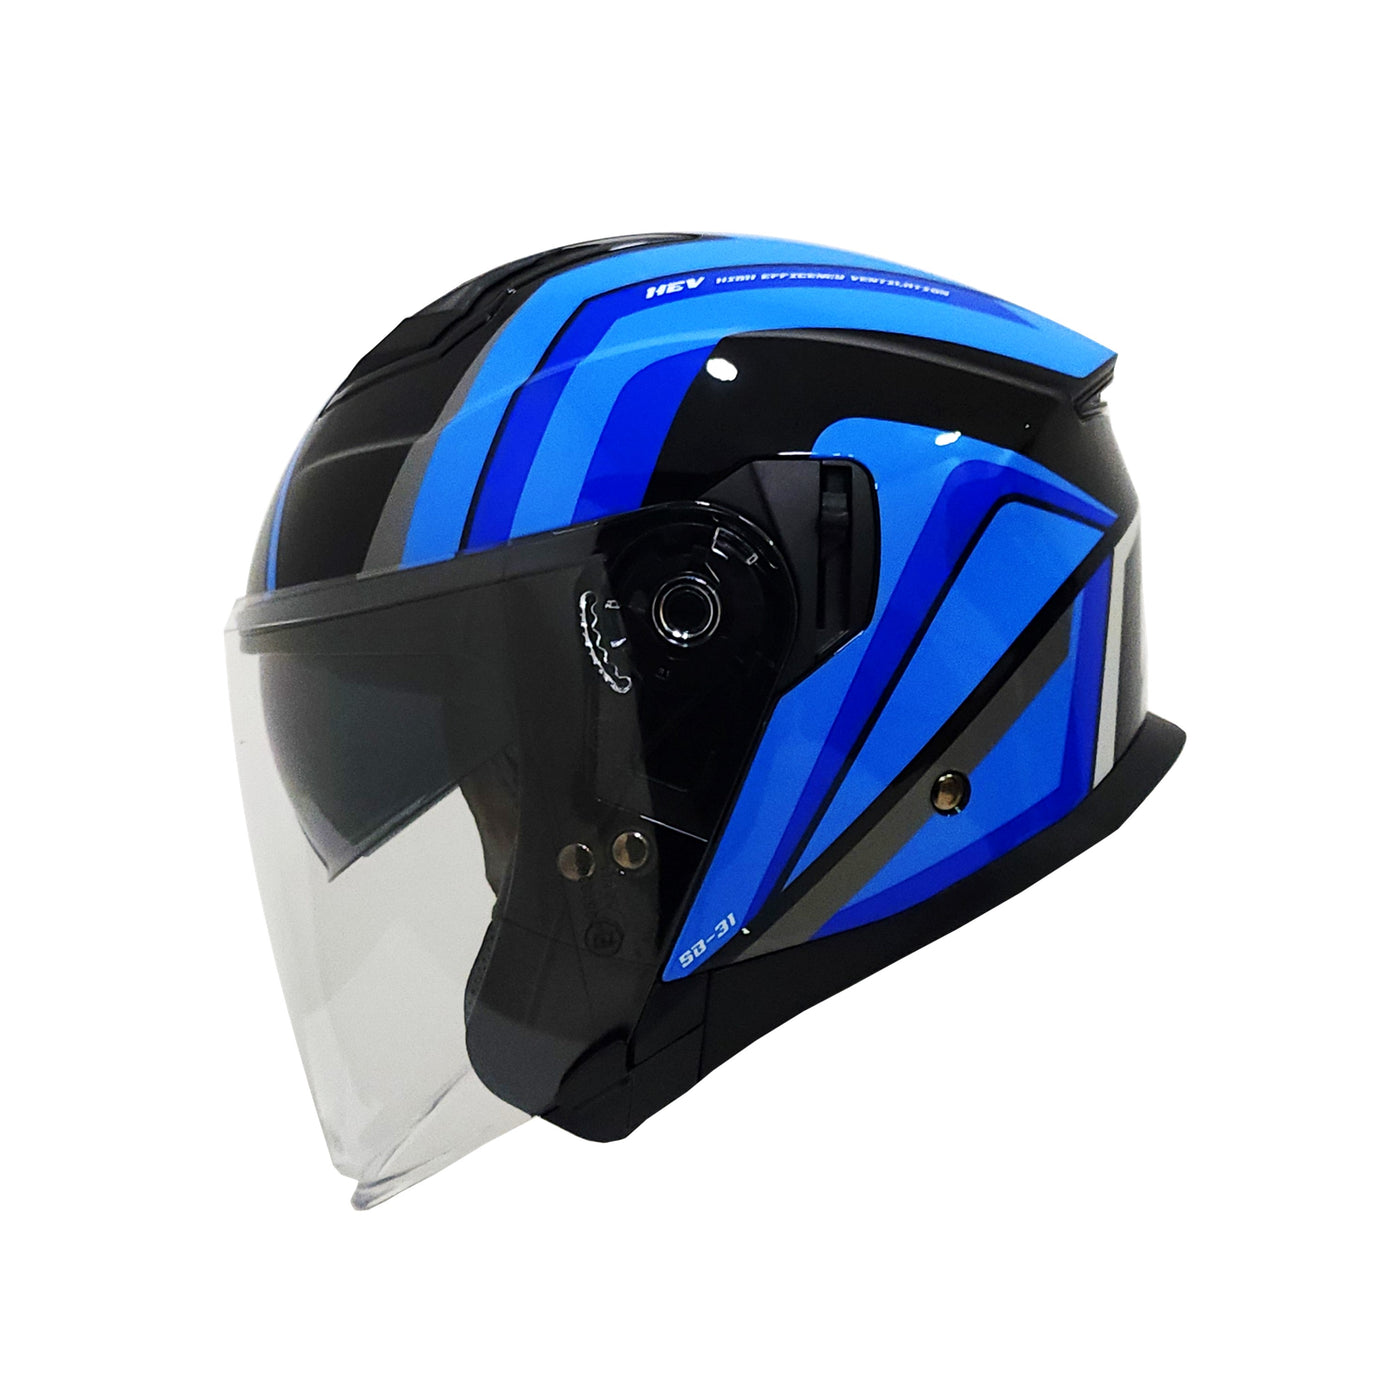 5M Boltz Graphic 1 Blue Helmet